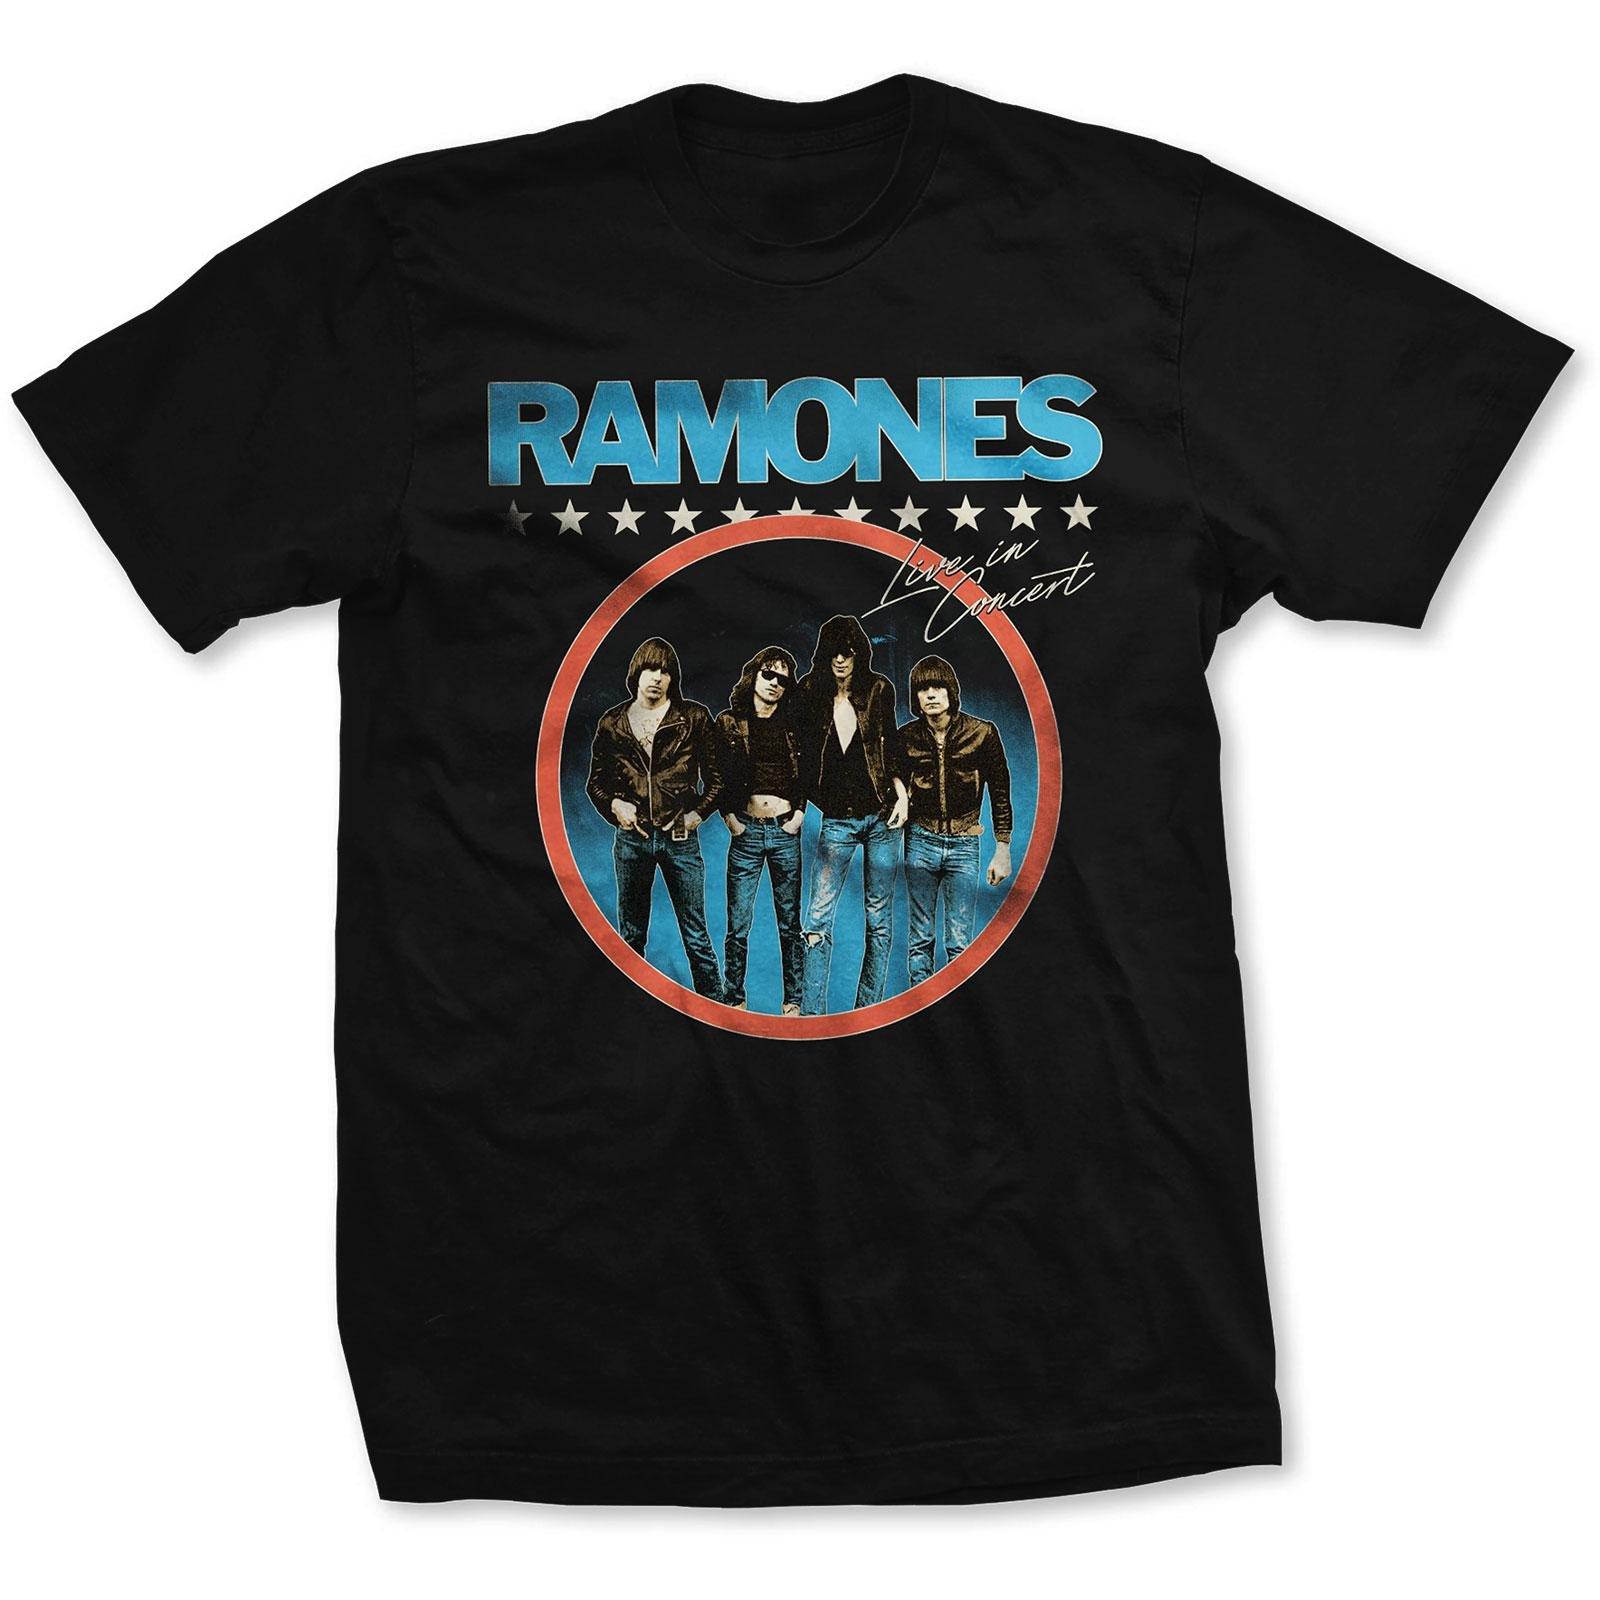 Live In Concert Tshirt Damen Schwarz S von Ramones